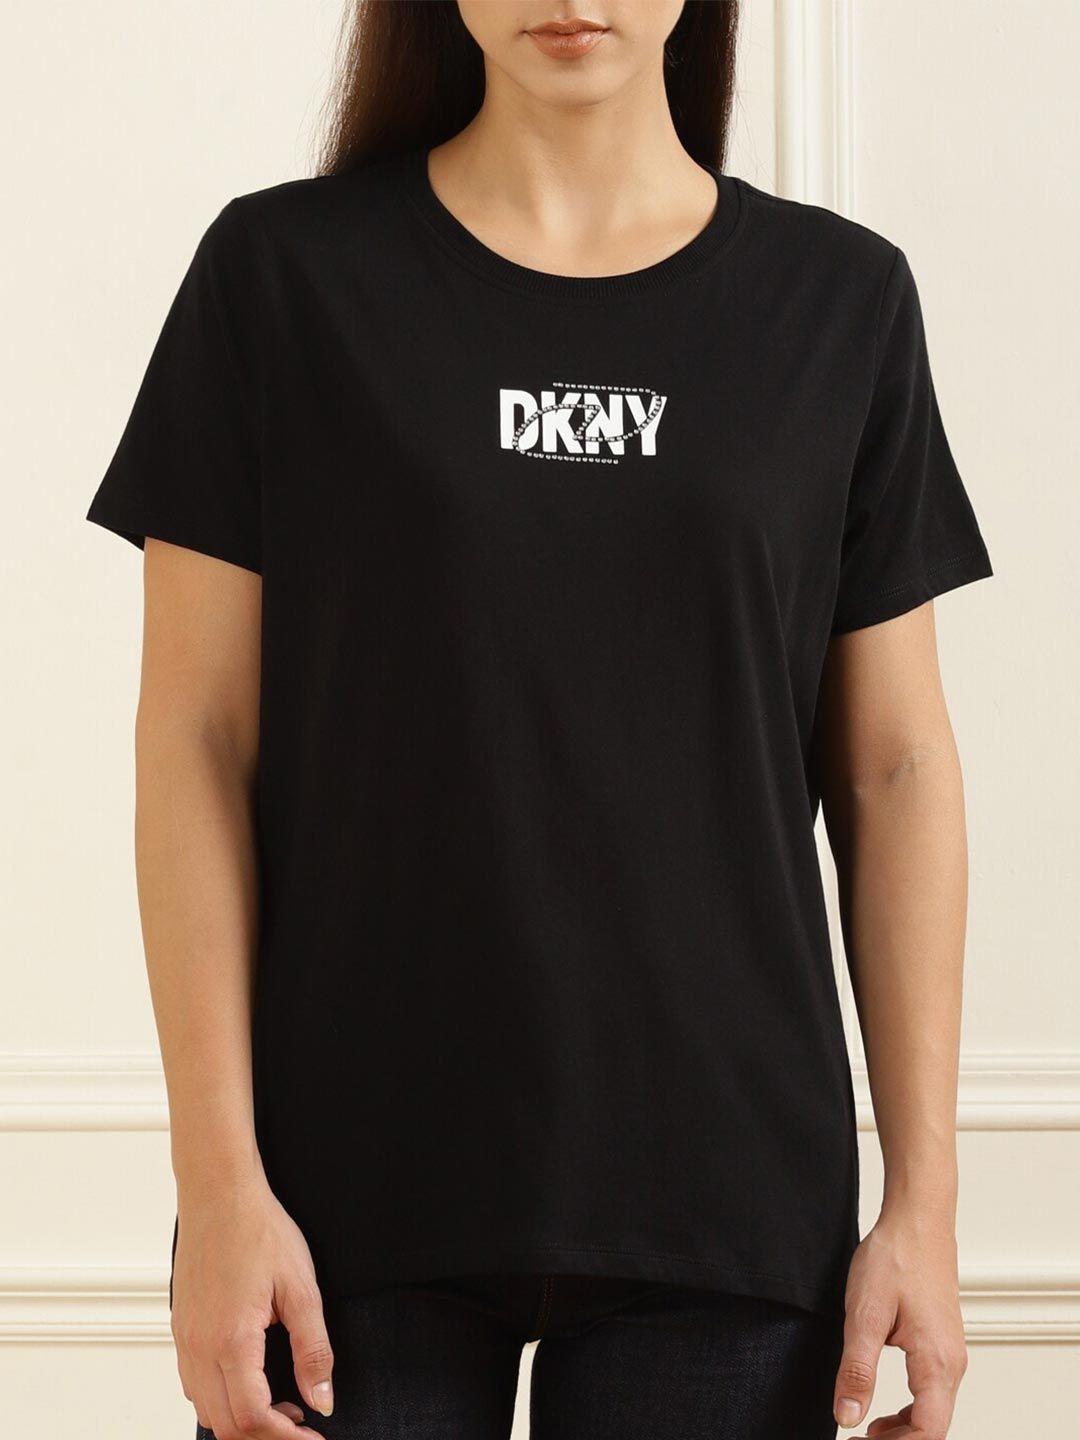 dkny women black typography pure cotton t-shirt